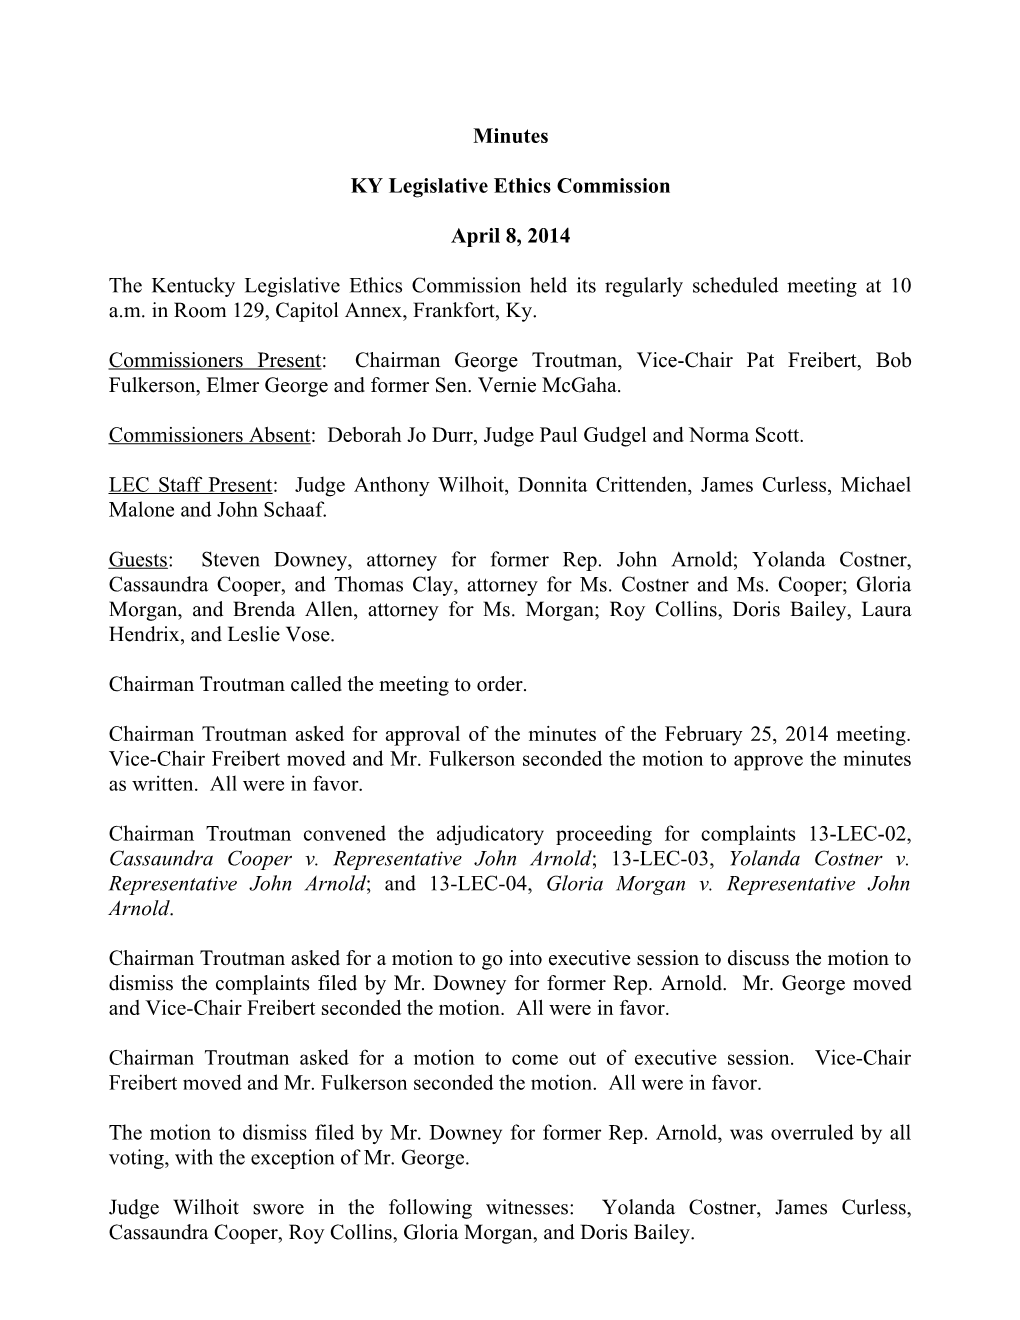 KY Legislative Ethics Commission s2